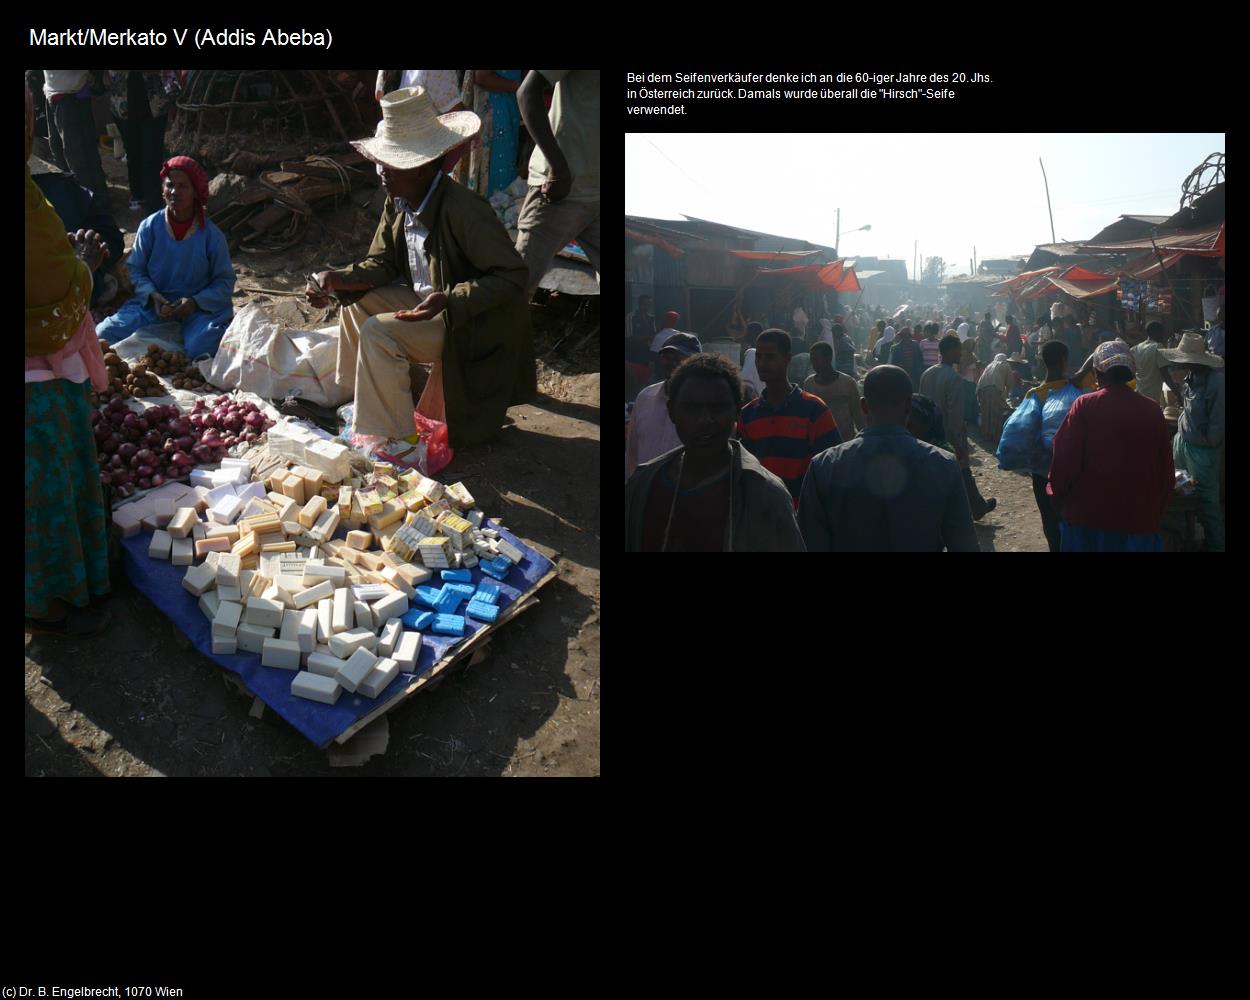 Markt/Merkato V (Addis Abeba) in Äthiopien